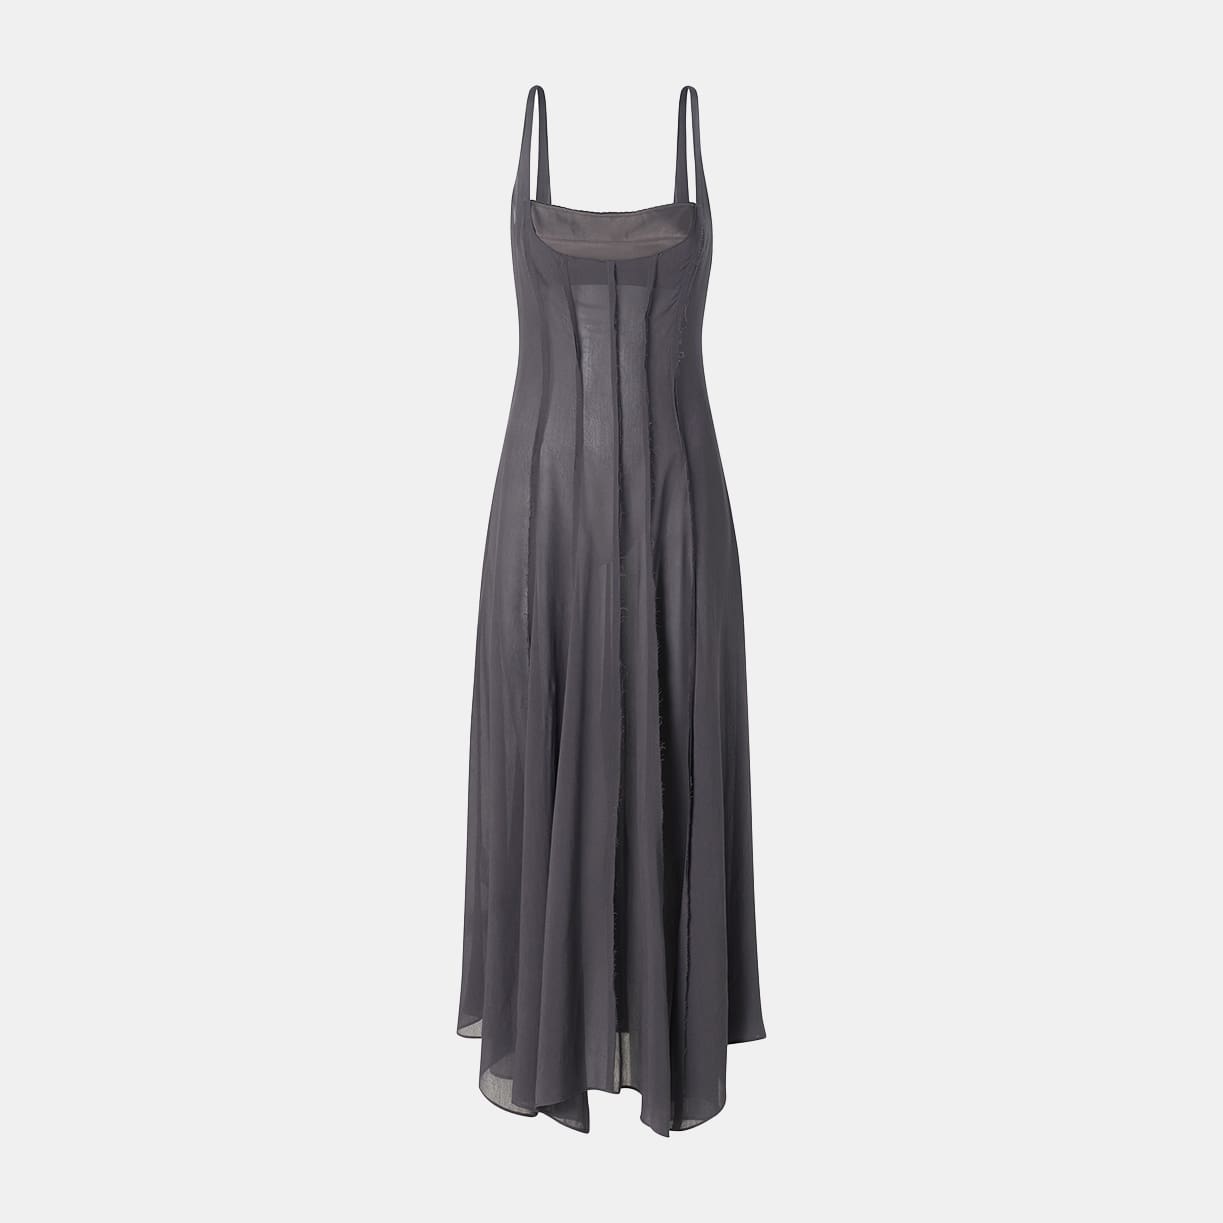 Mango Selection black slip dress